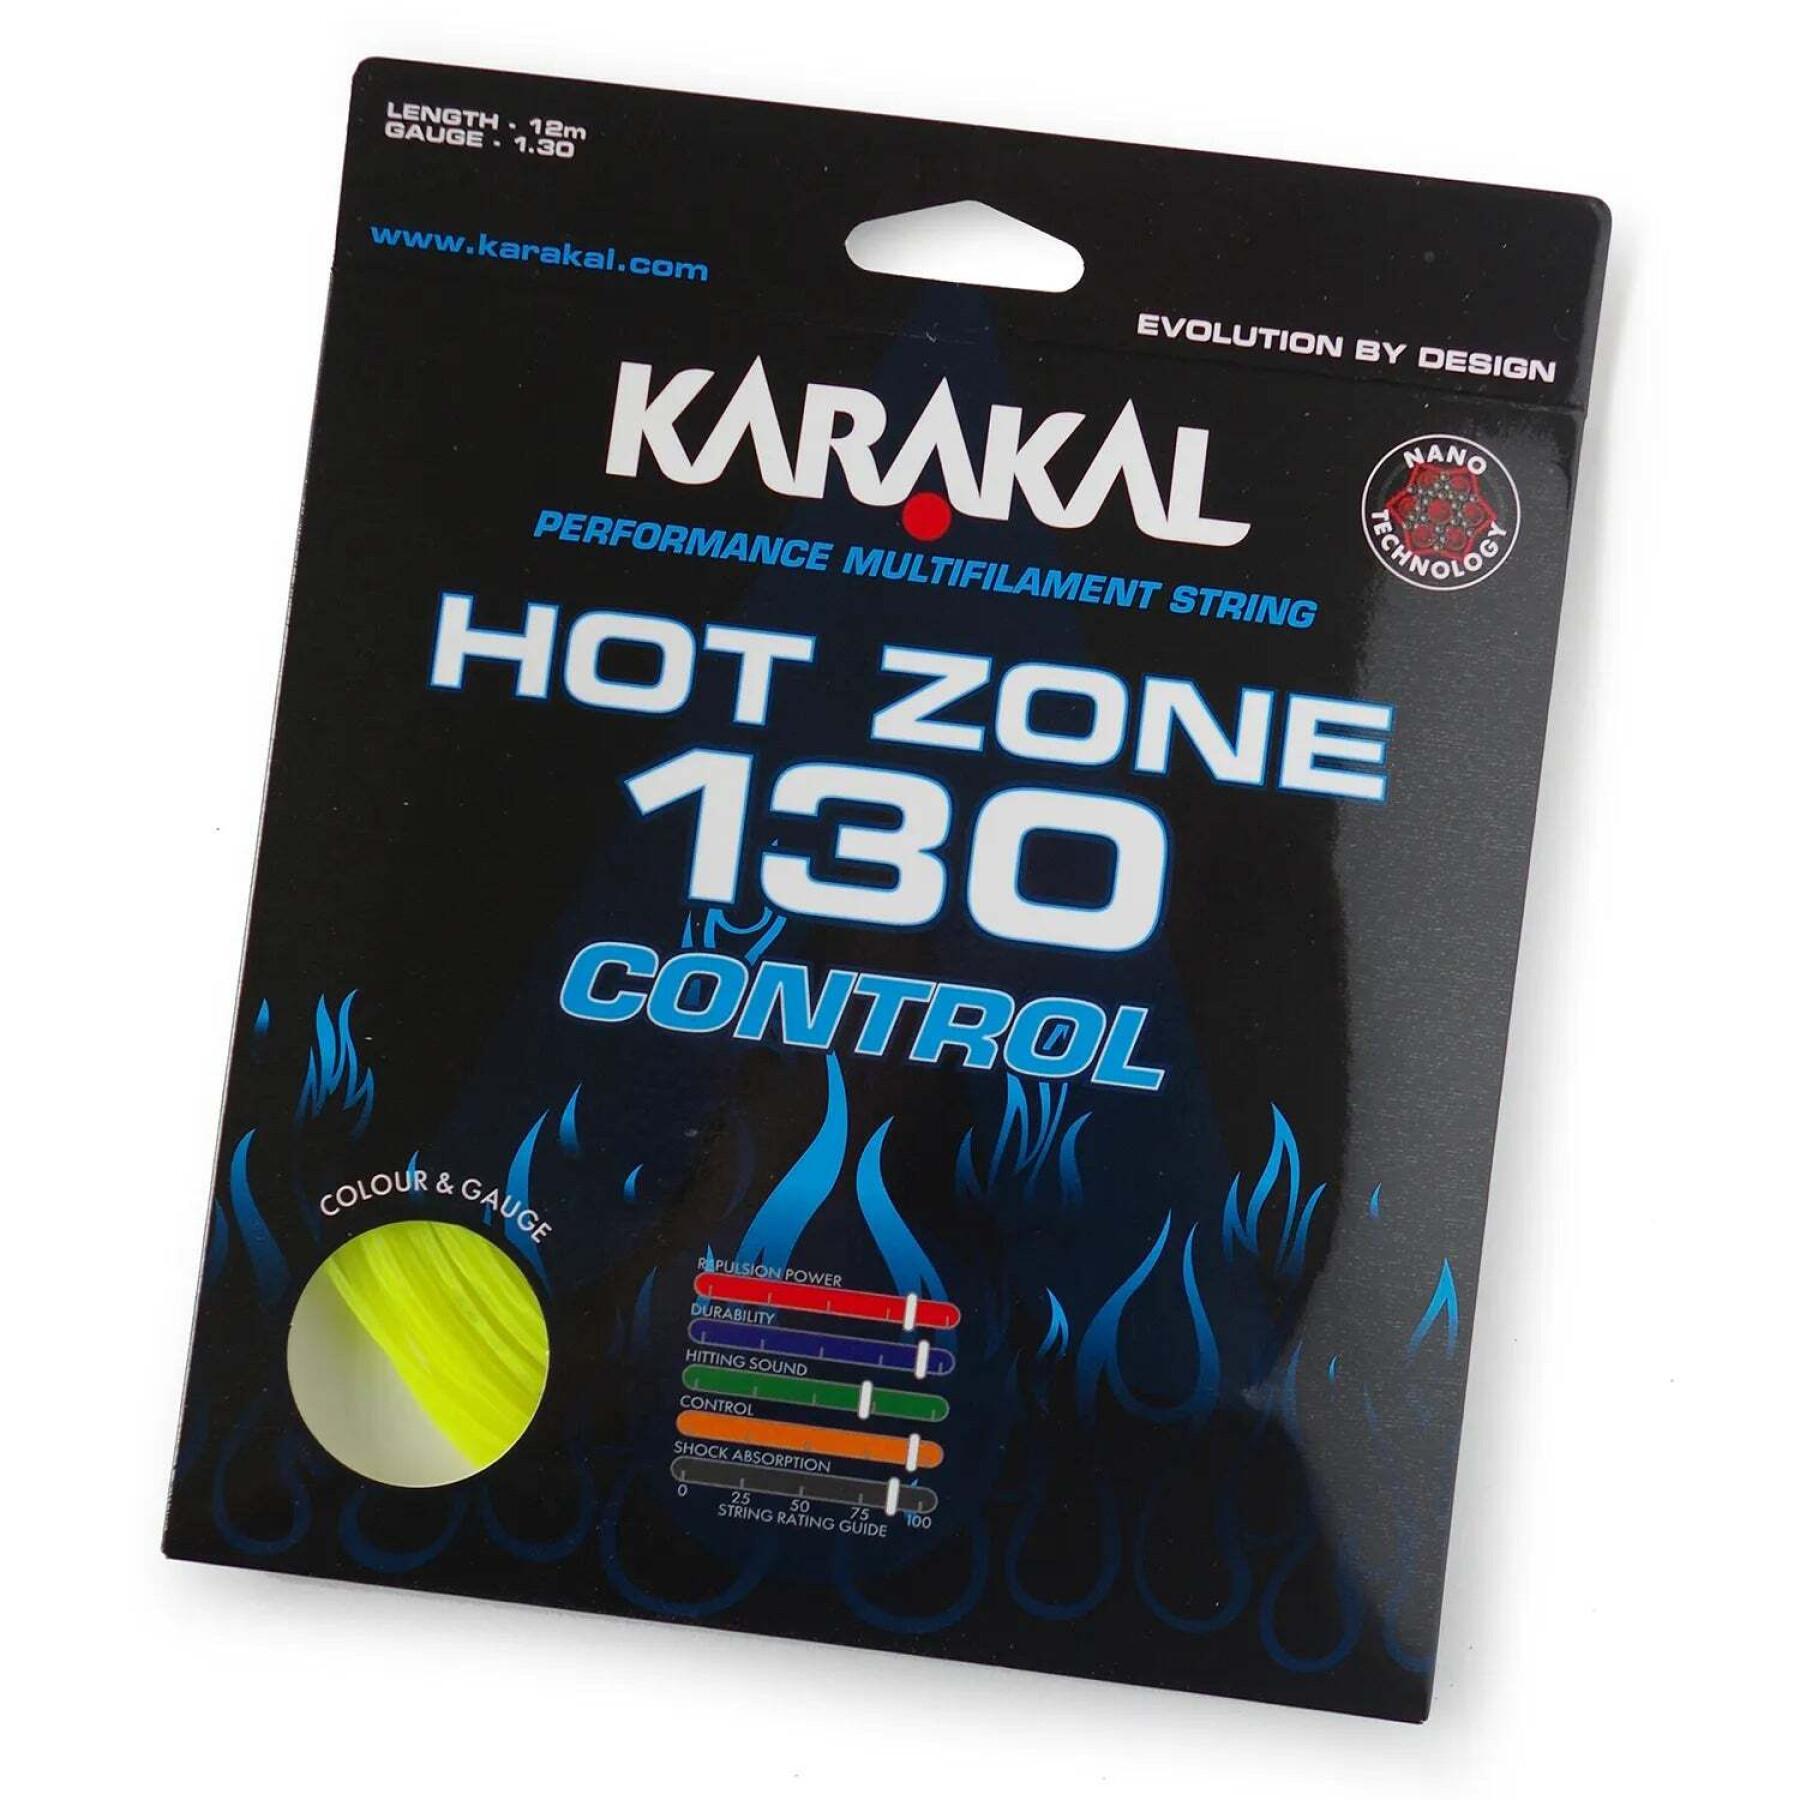 Squash strings Karakal Hot Zone Control 130